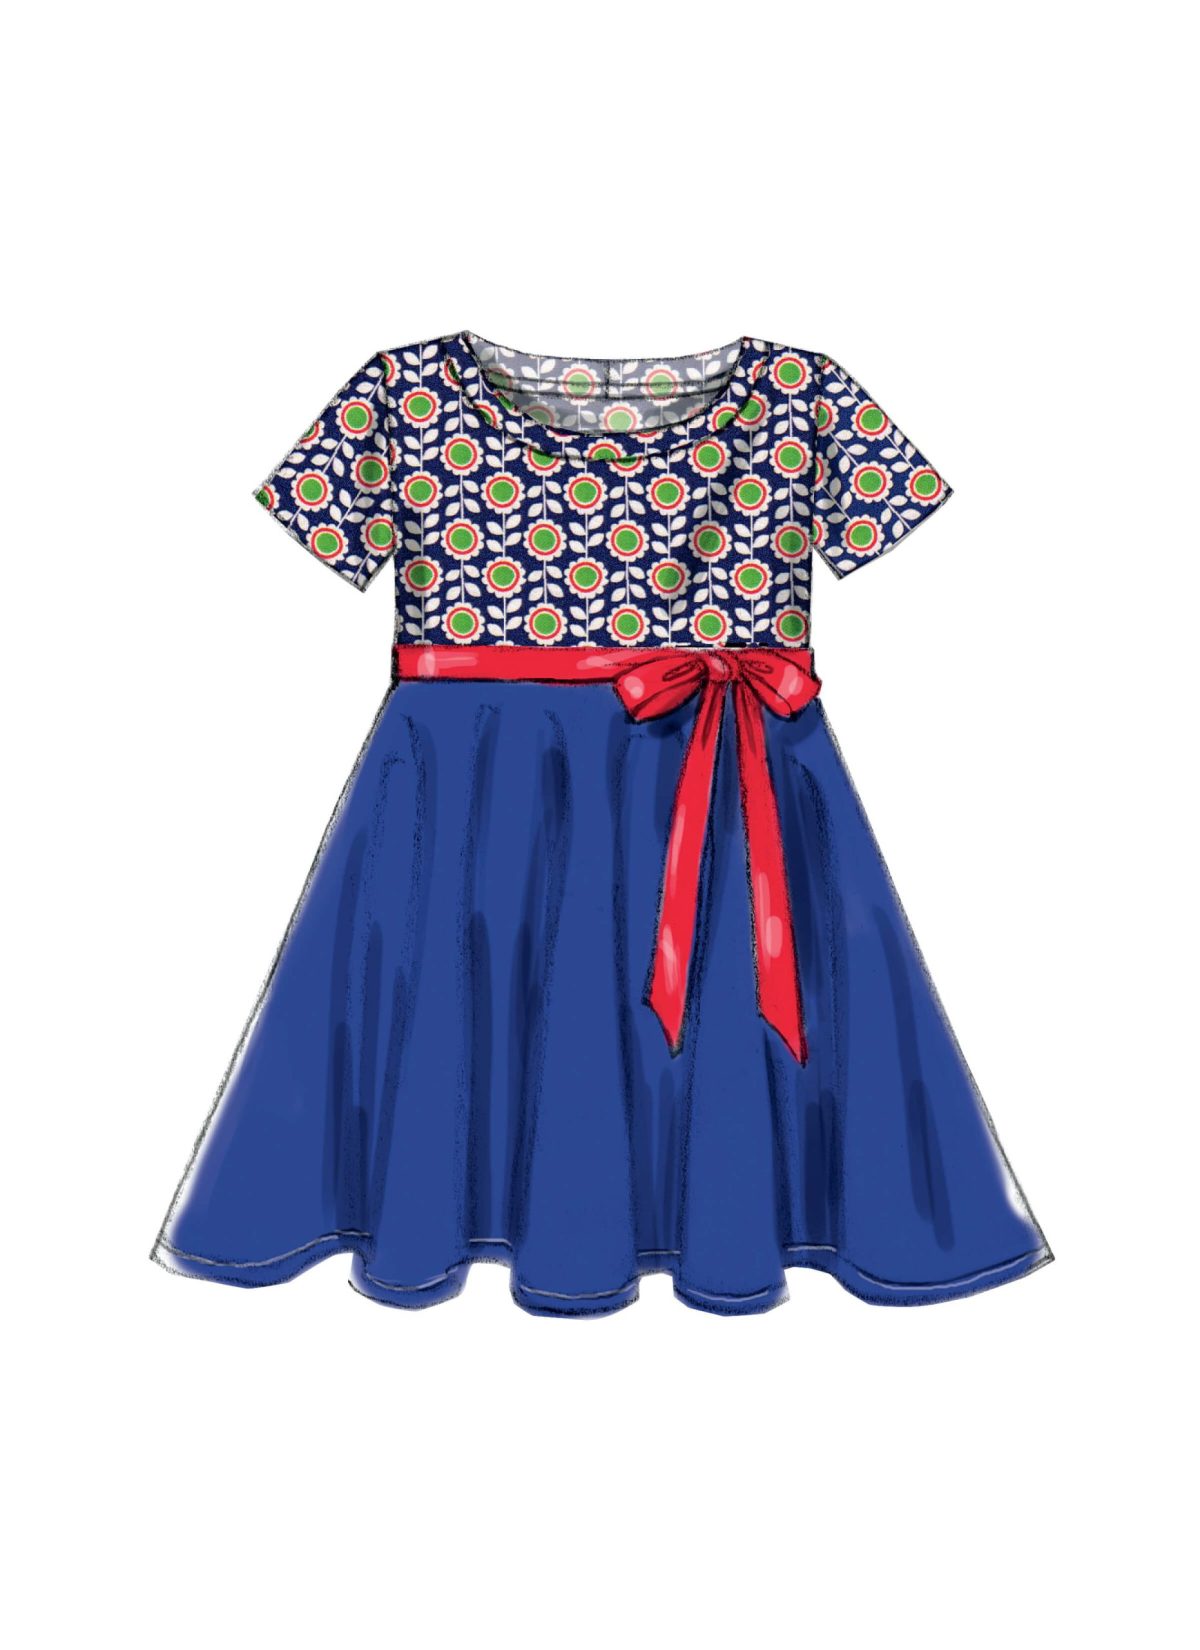 McCall's Sewing Pattern M6915 Chidren's/Girls' Dresses